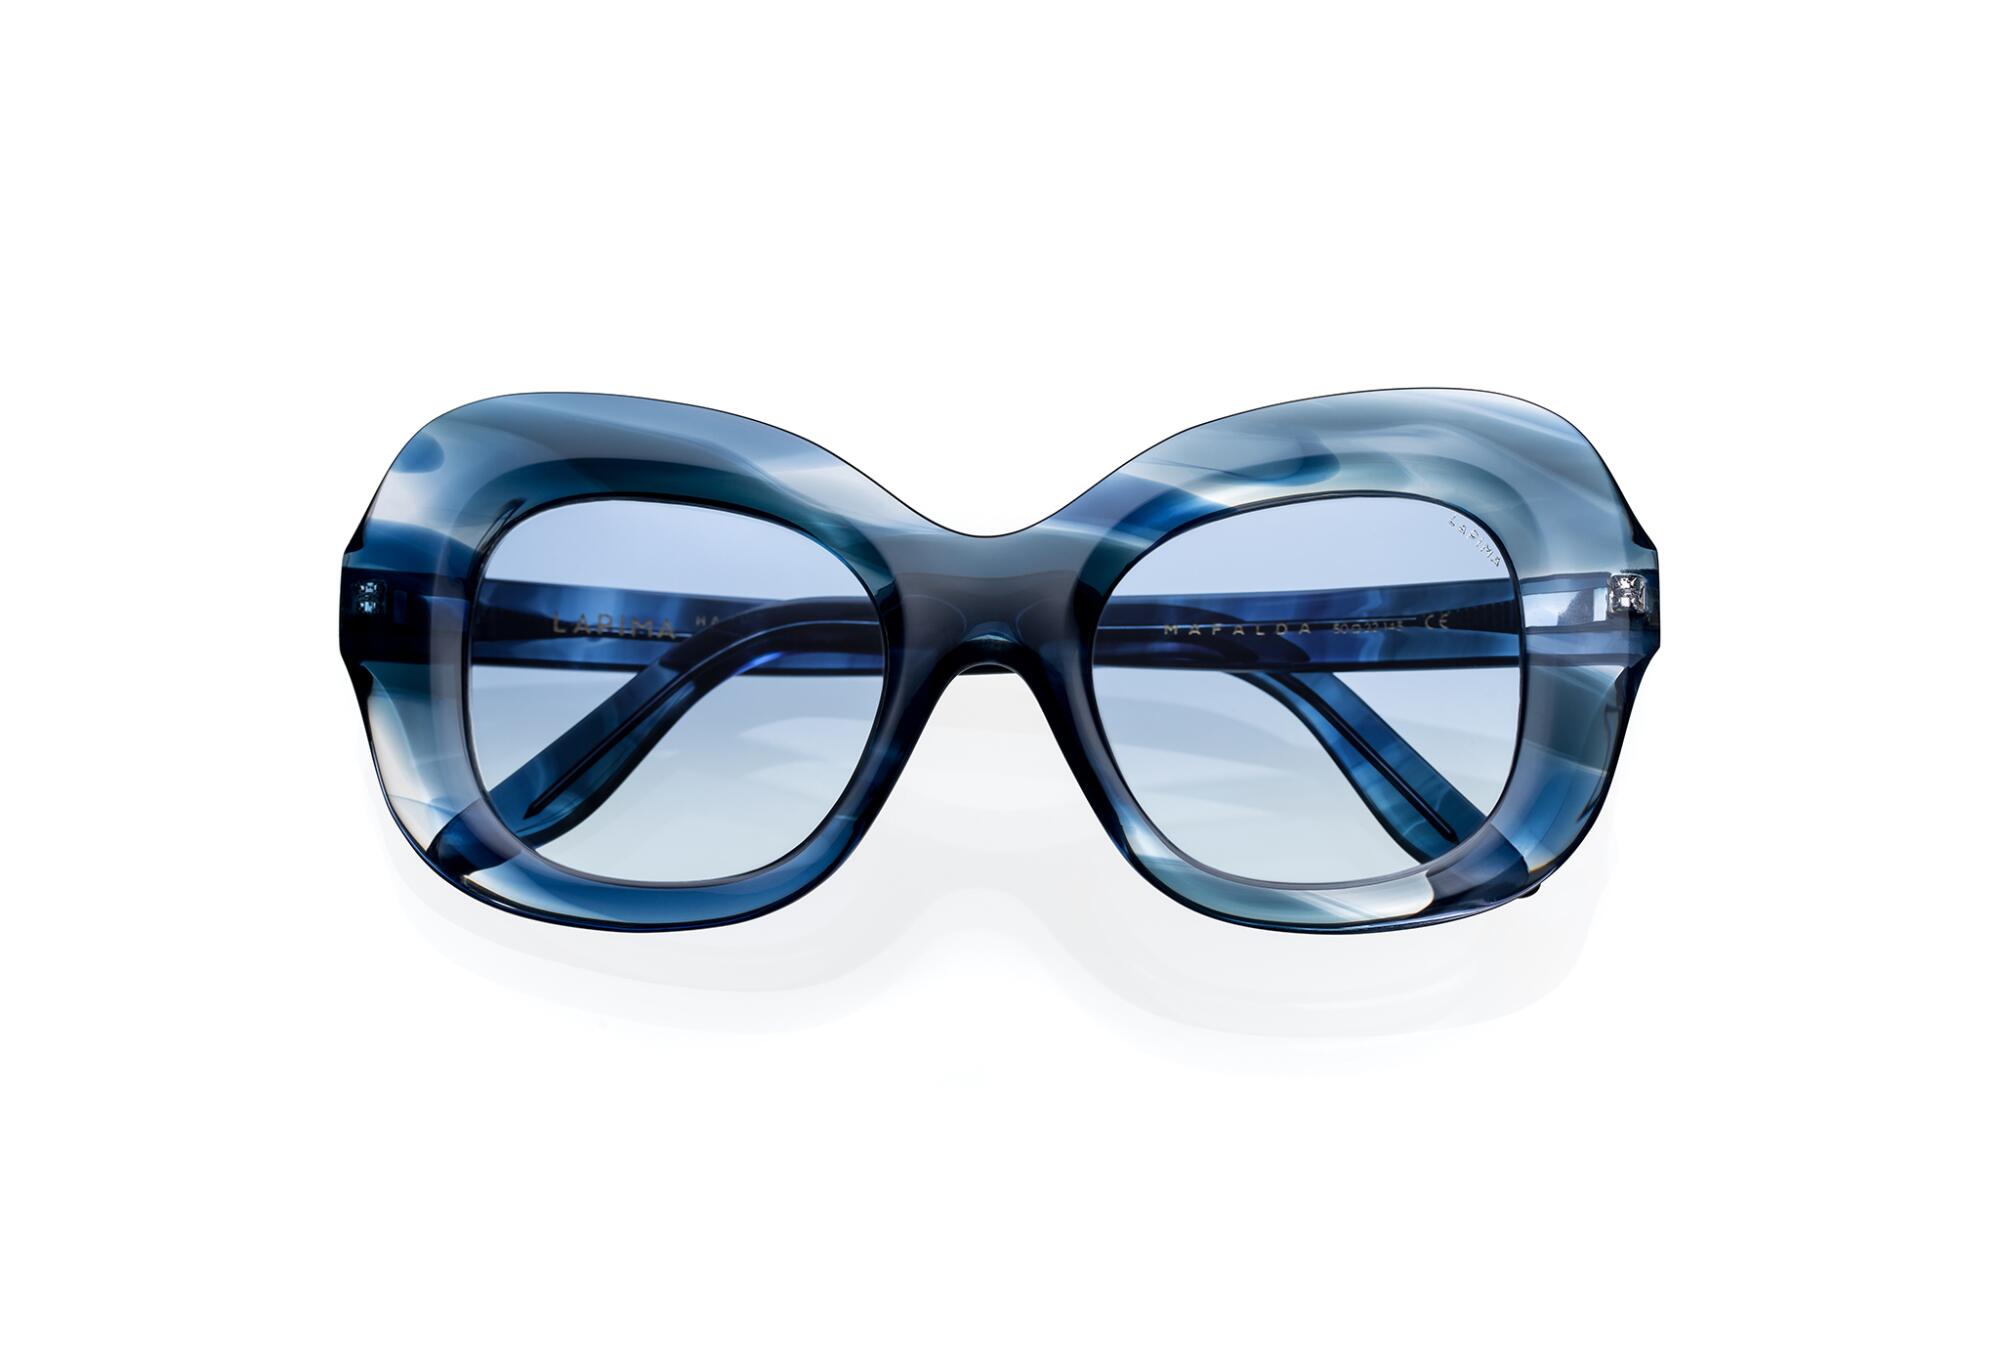 Lapima sunglasses have a thick curvy frame.